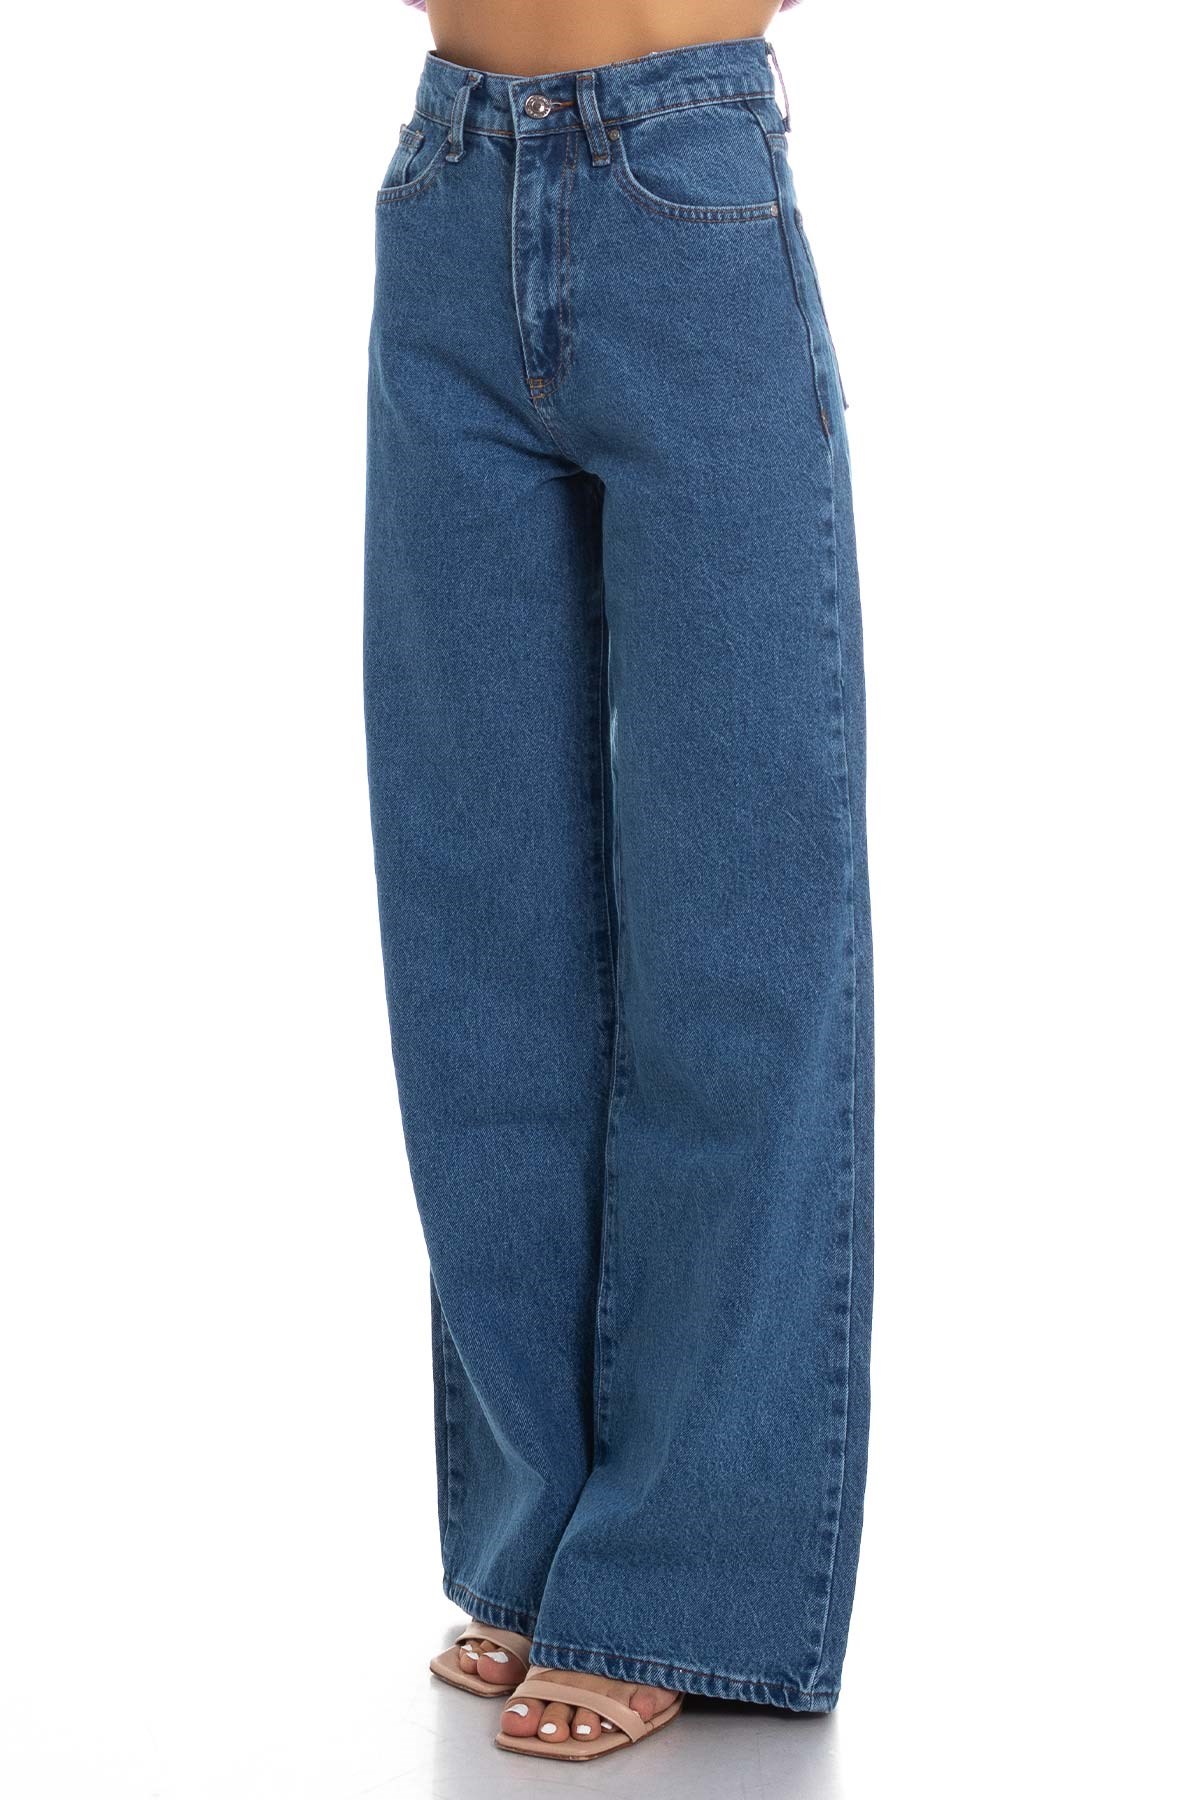 Ultra Yüksek Bel İspanyol Paça Kadın Kot Pantolon